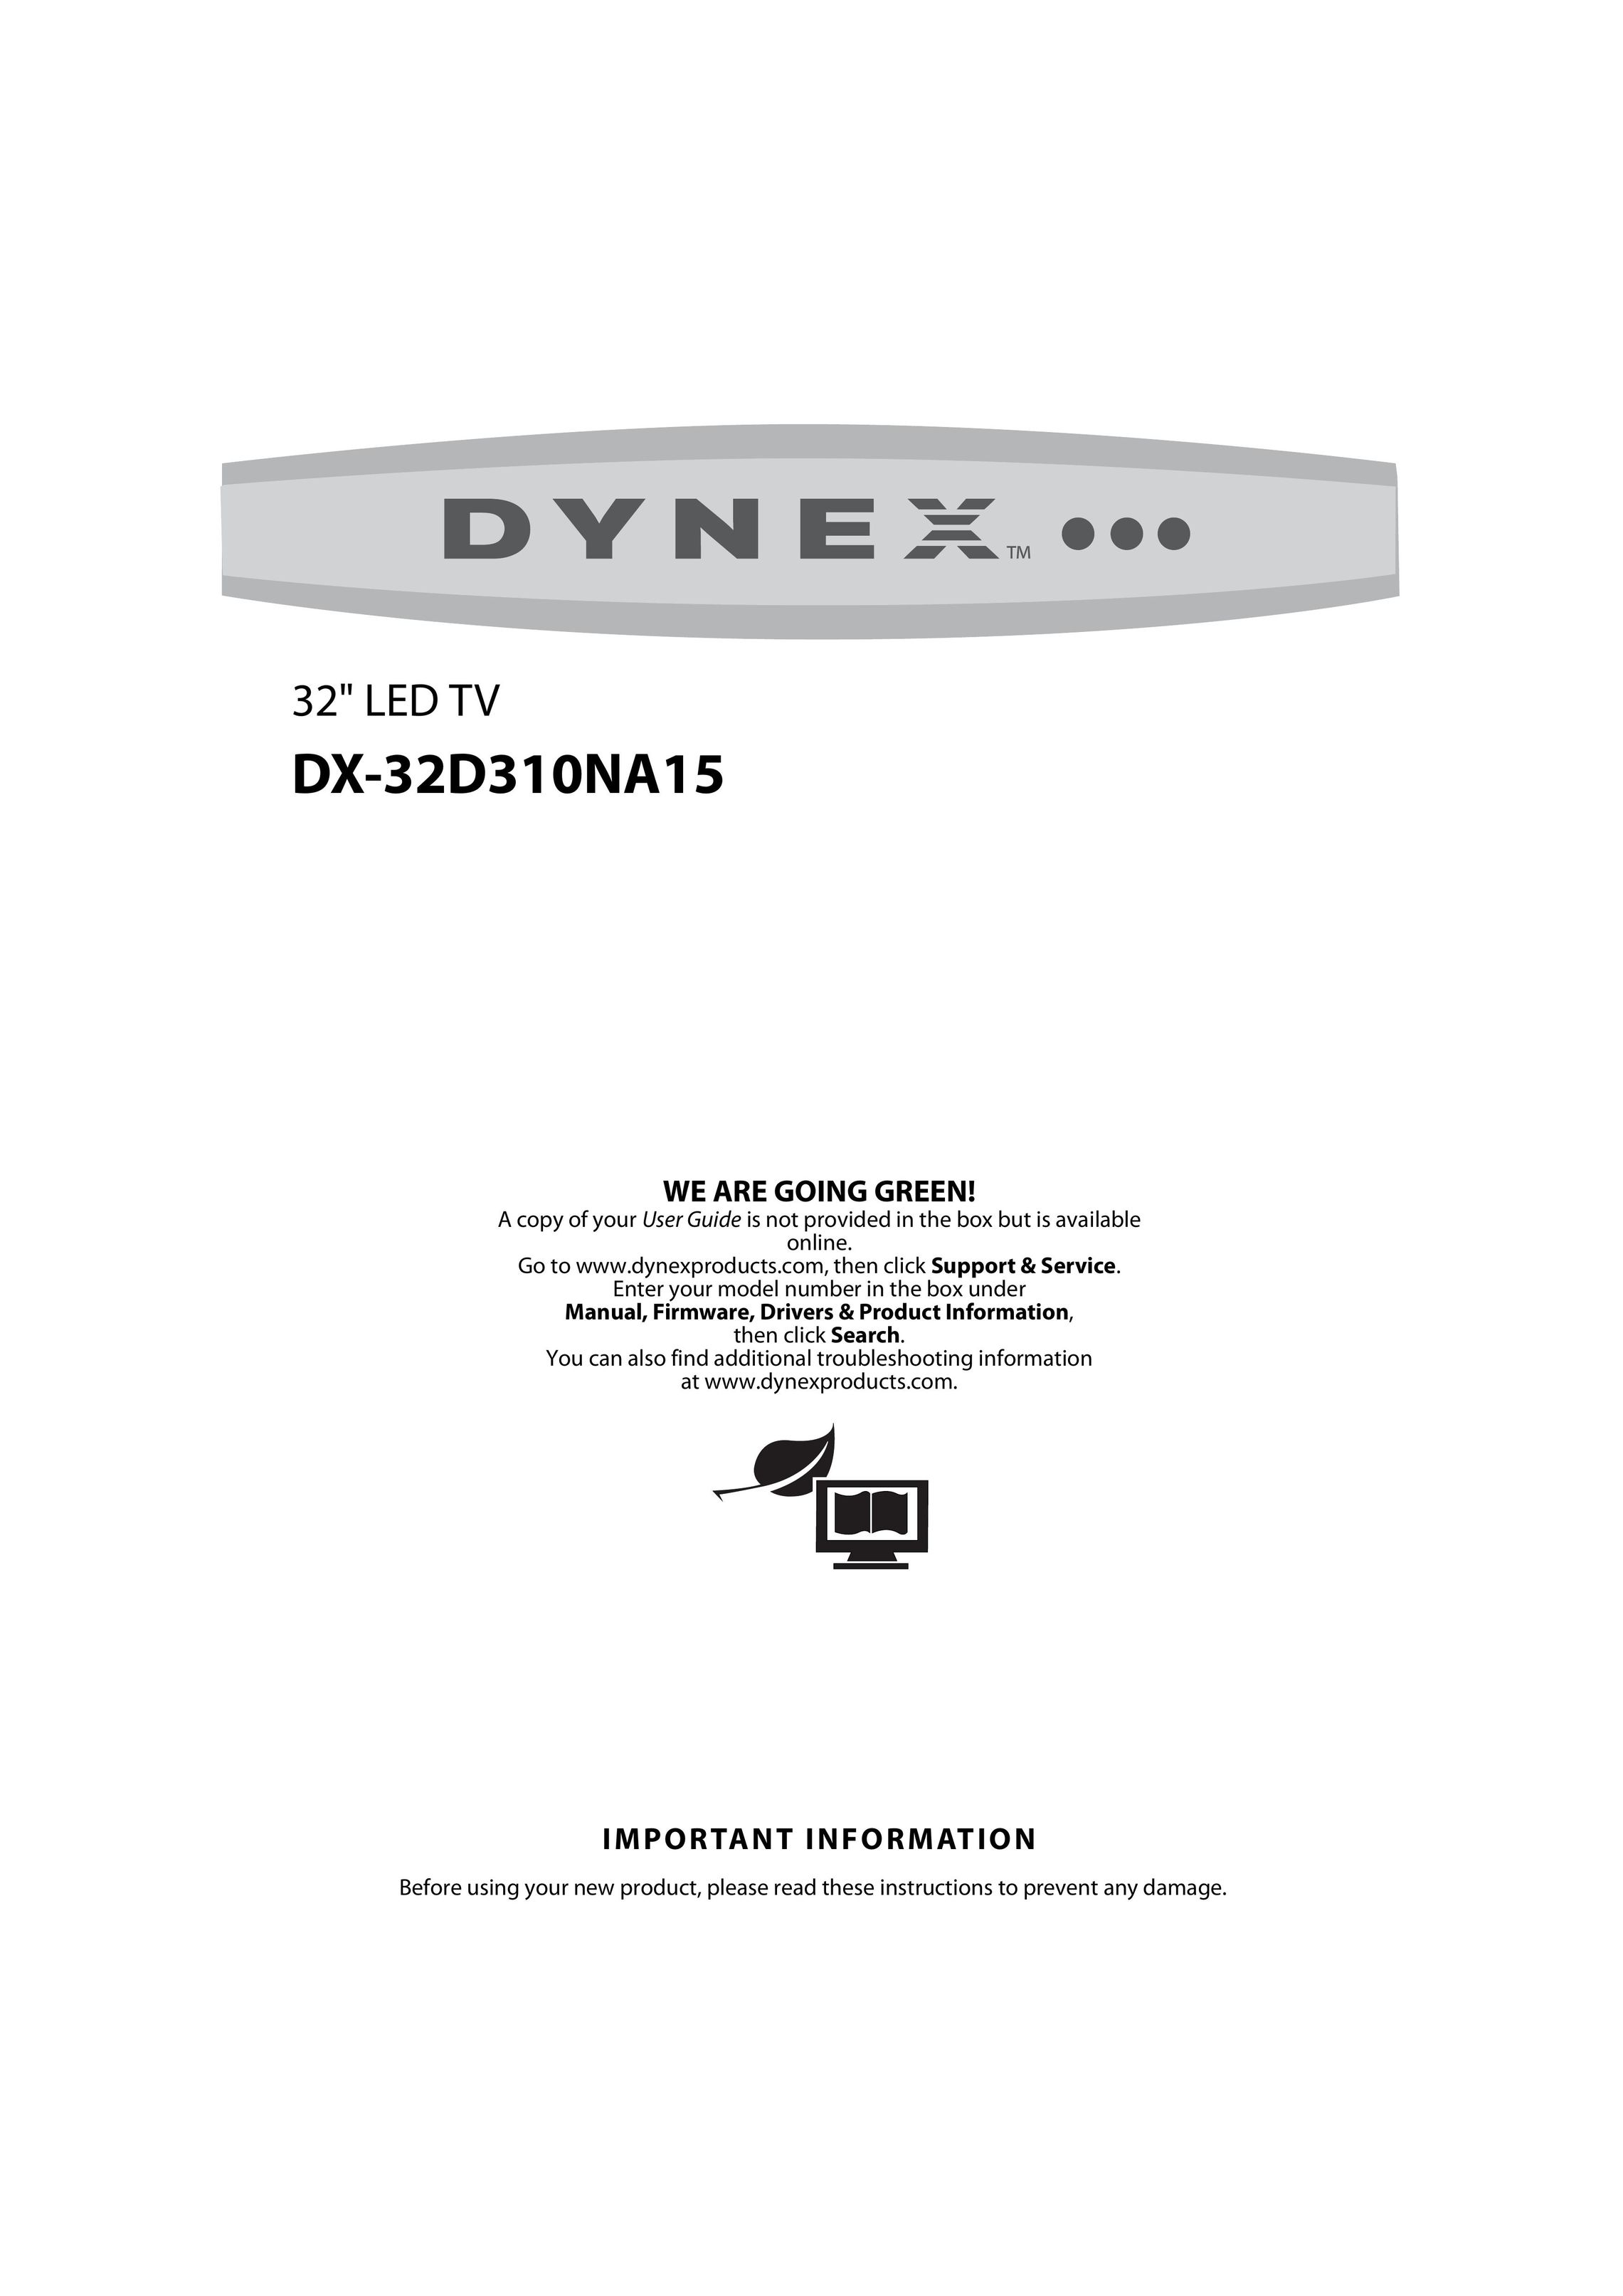 Dynex DX-32D310NA15 Car Satellite TV System User Manual